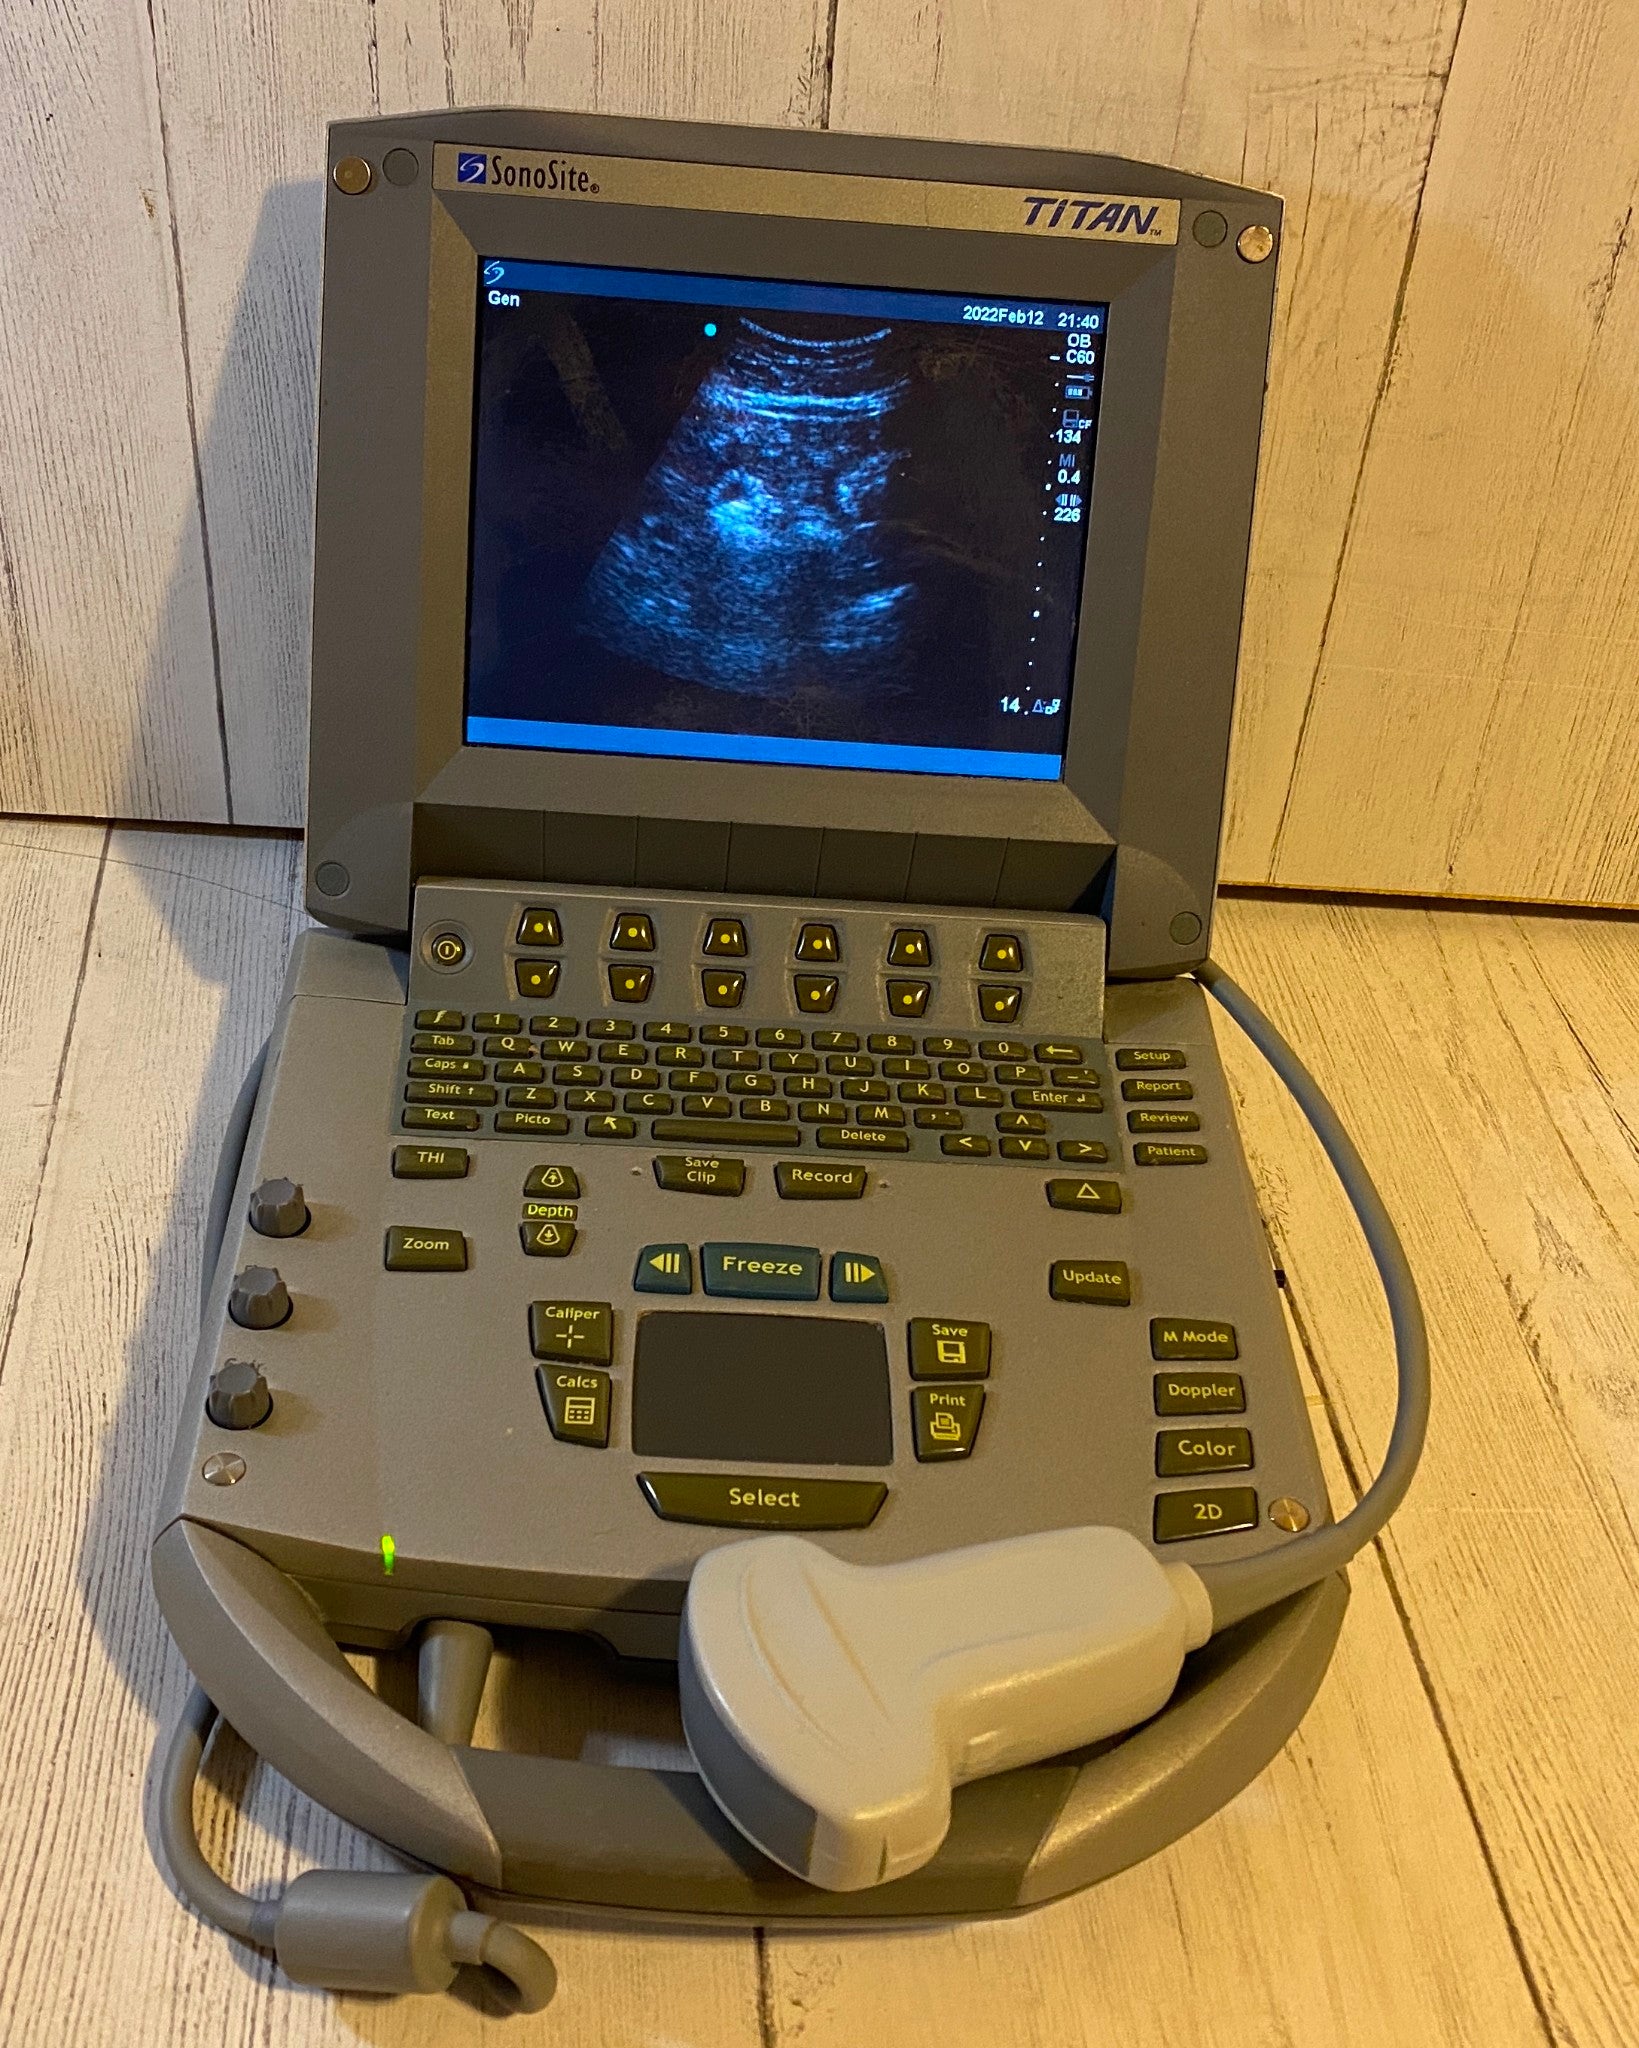 Sonosite Titan Portable Ultrasound 2005 with convex probe DIAGNOSTIC ULTRASOUND MACHINES FOR SALE